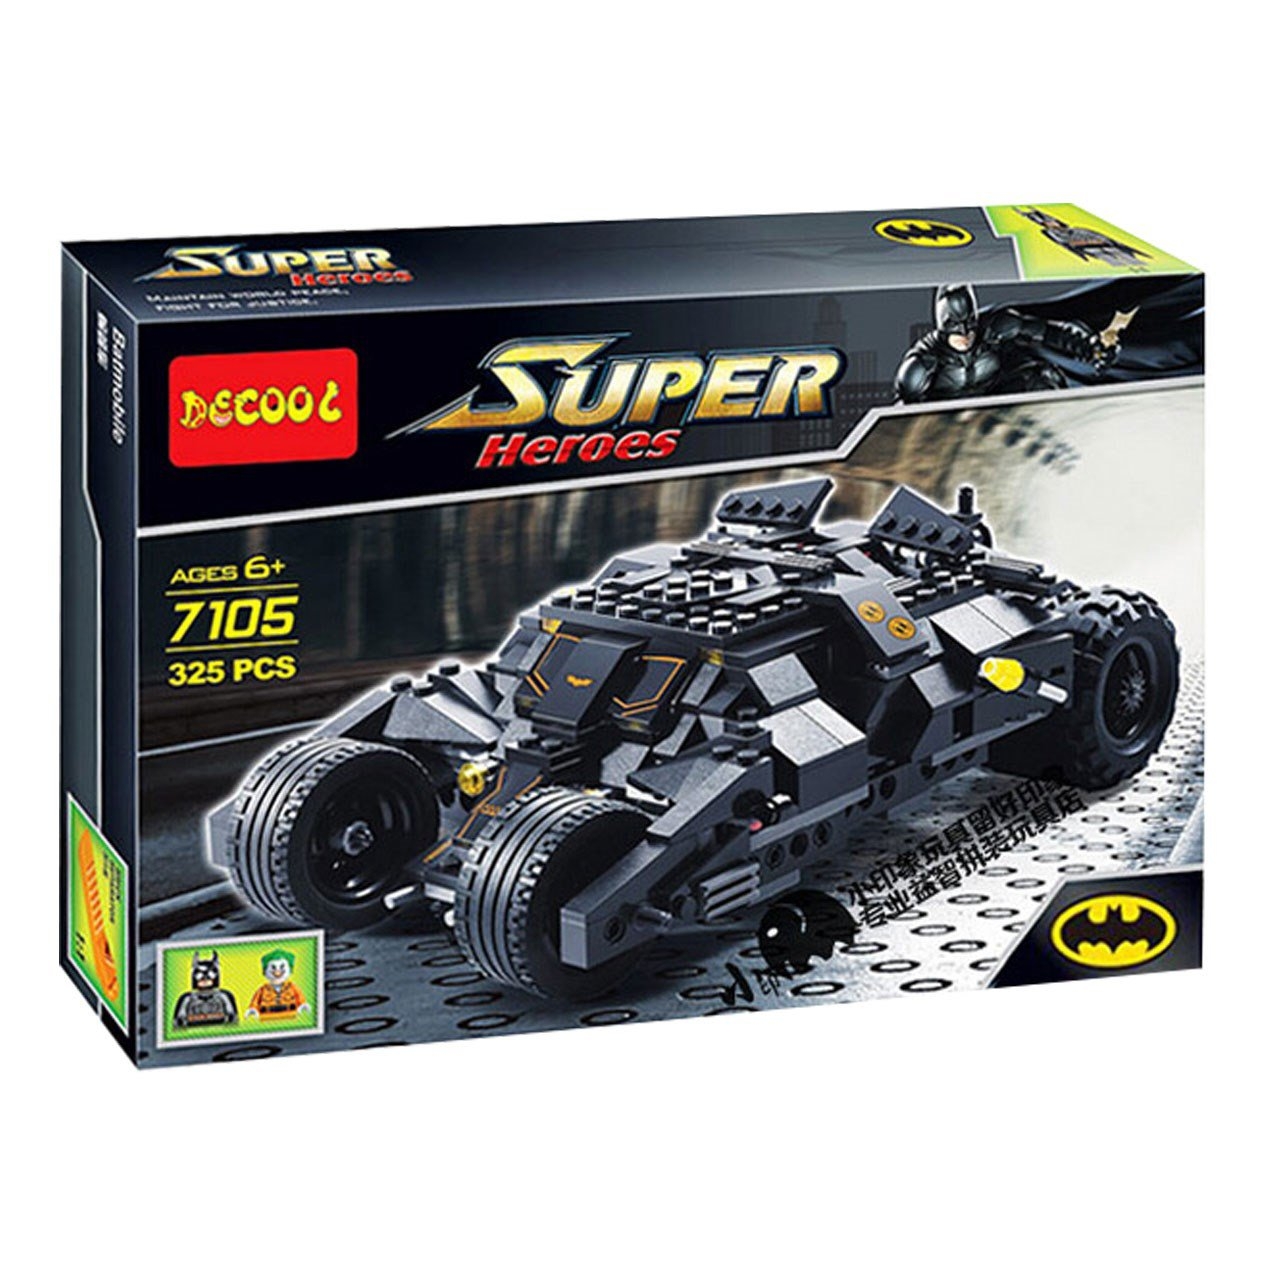 ساختنی دکول مدل Super Heroes 7105